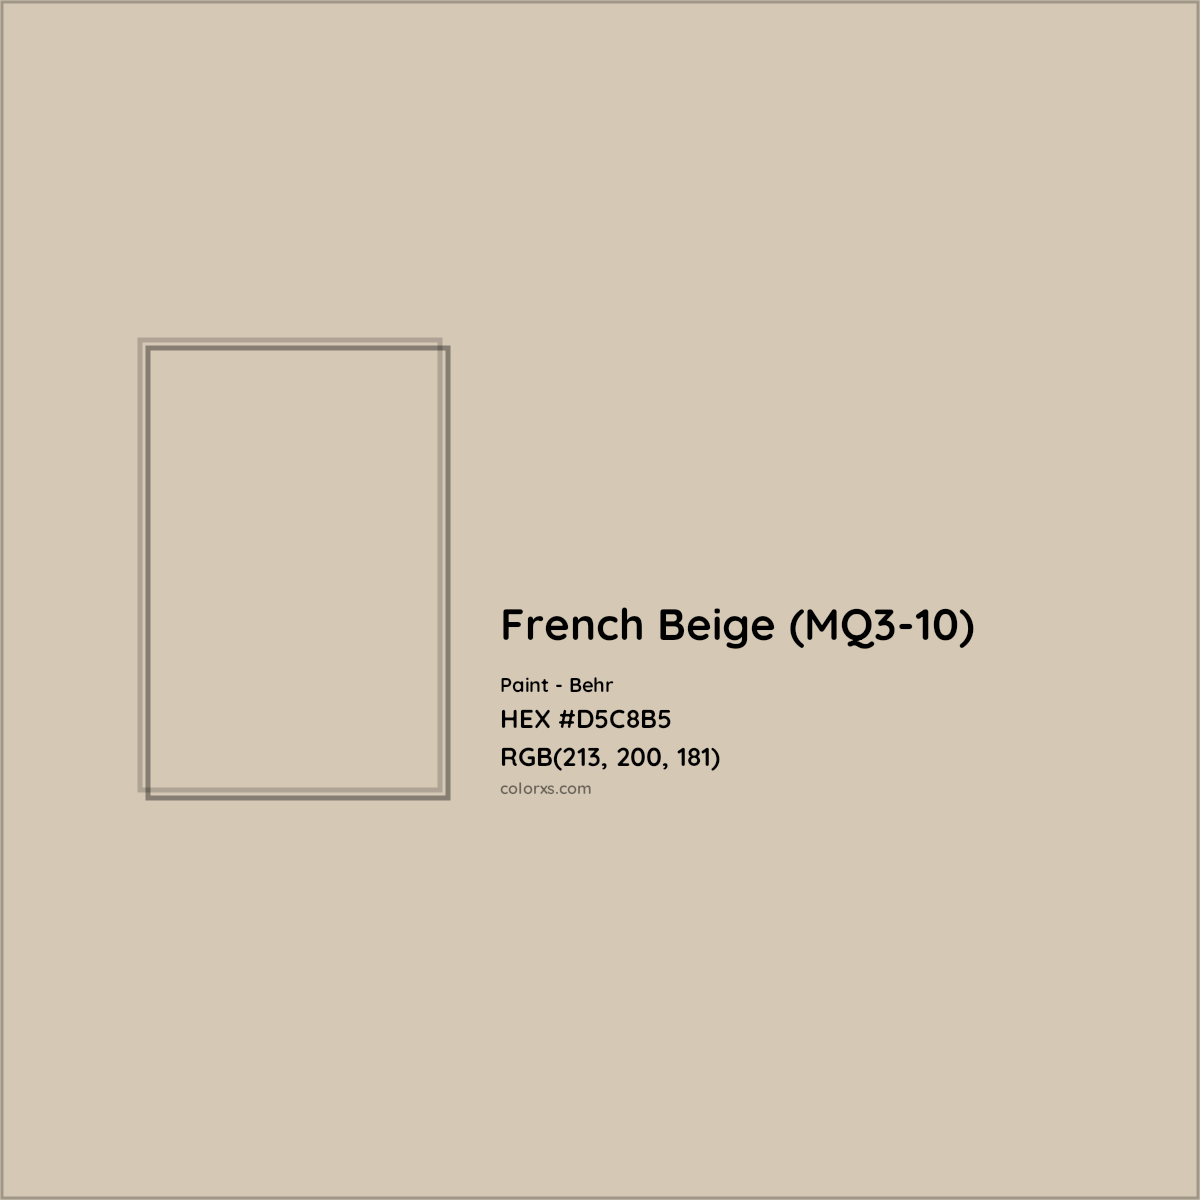 HEX #D5C8B5 French Beige (MQ3-10) Paint Behr - Color Code